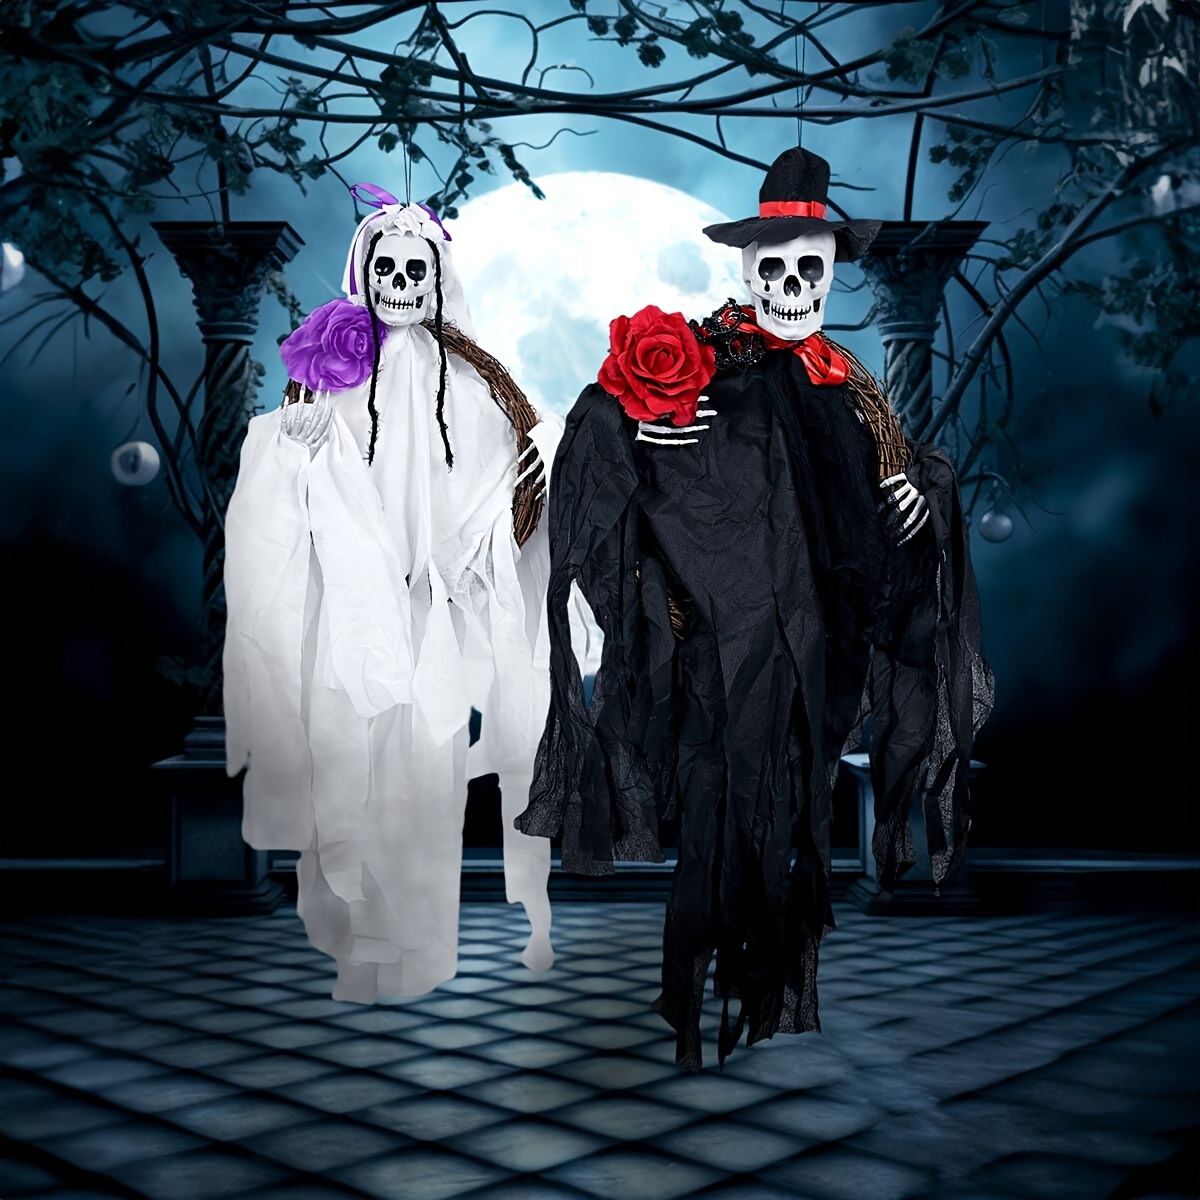 1PCS Scream Plush Glow Ghostface Plush Toys Horror Plushies Scream Stuff  Halloween Decoration Horror Themed Gift(Black)